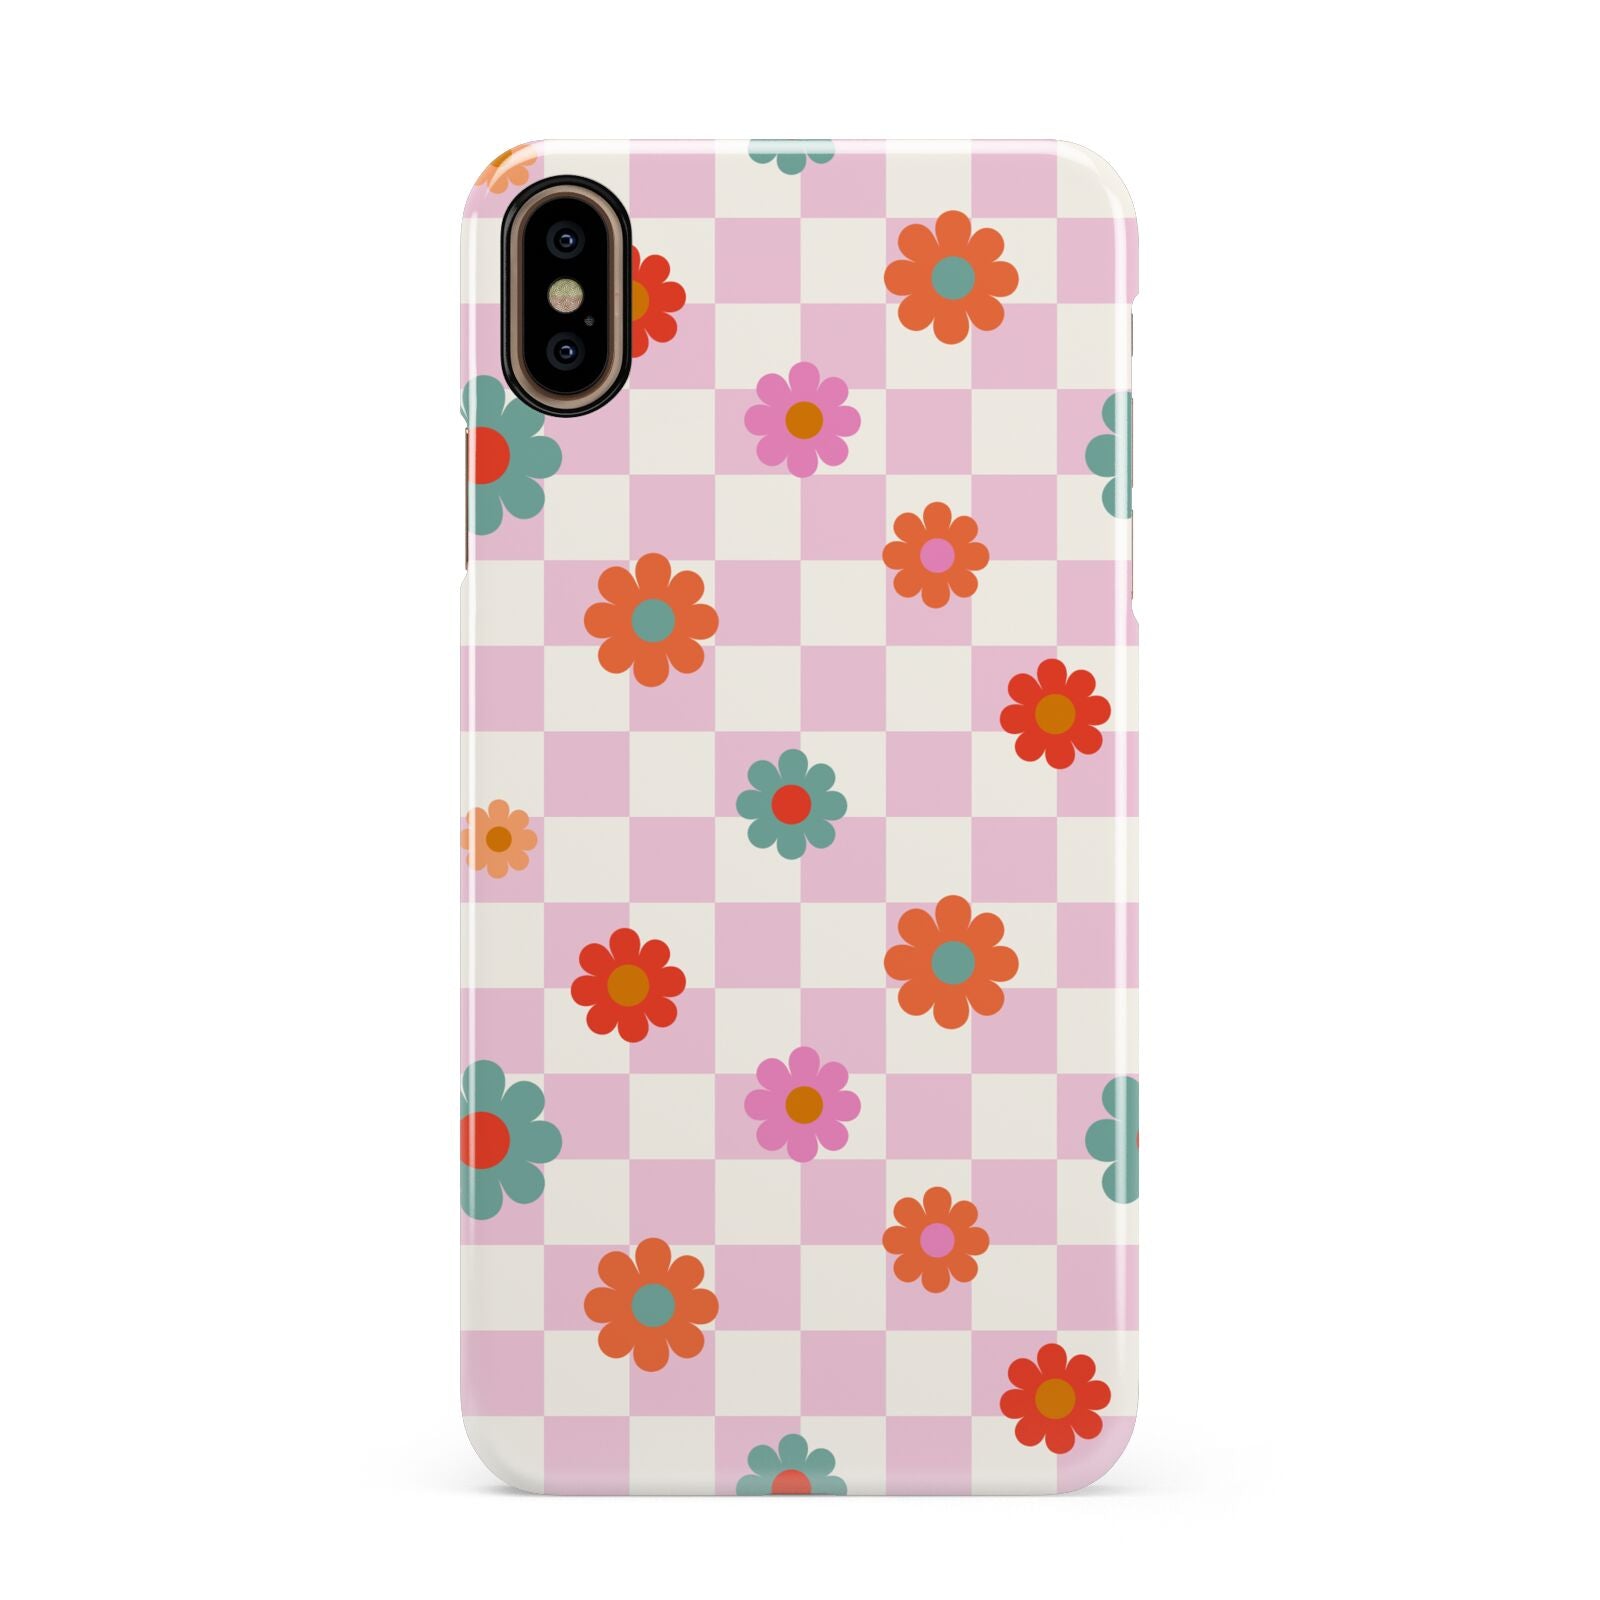 Flower Power Apple iPhone Xs Max 3D Snap Case